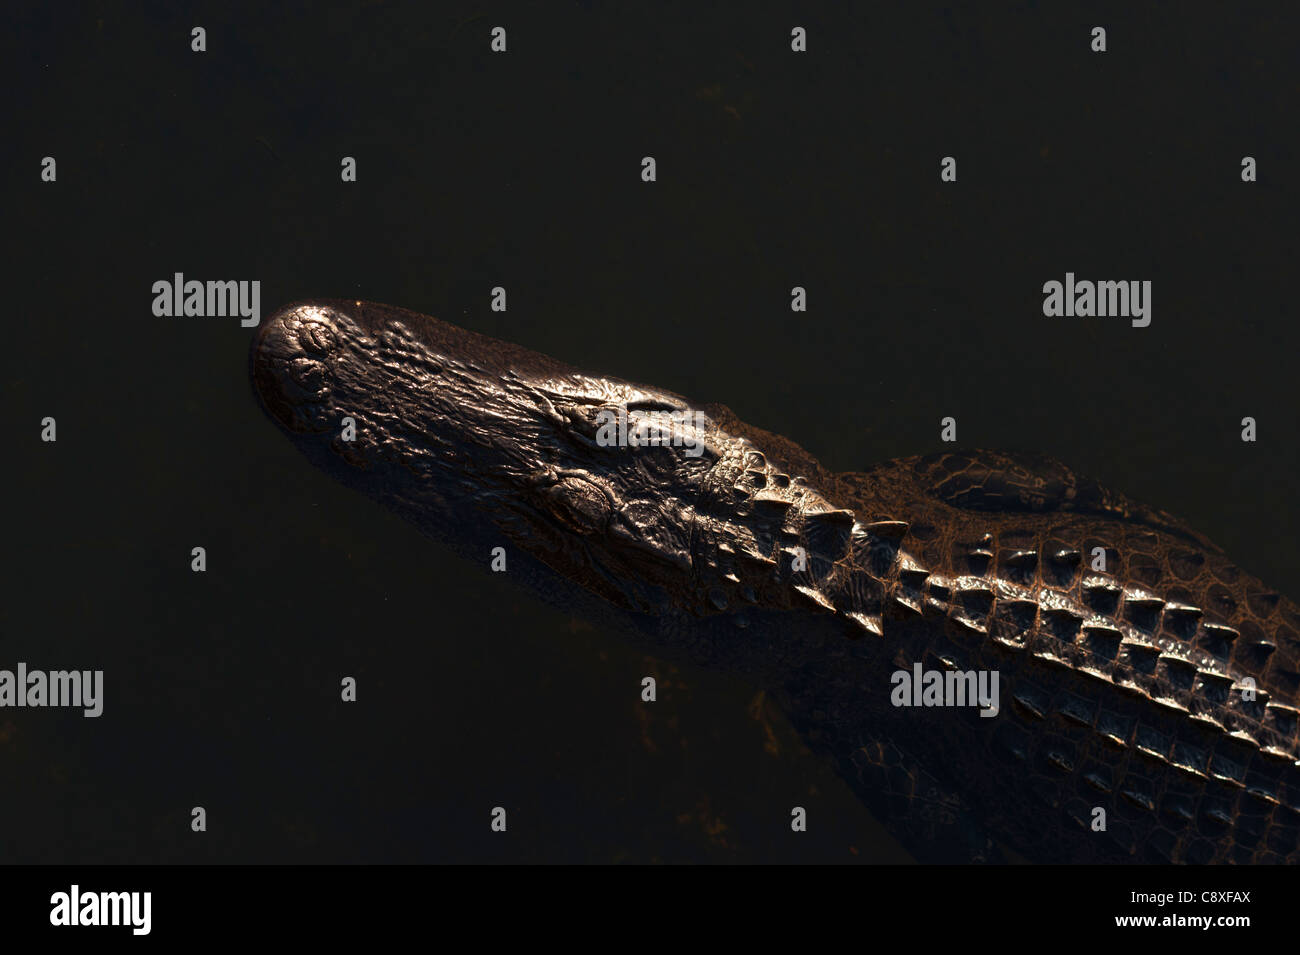 American Alligator Alligator mississippensis Anhinga Trail Florida Everglades Stock Photo